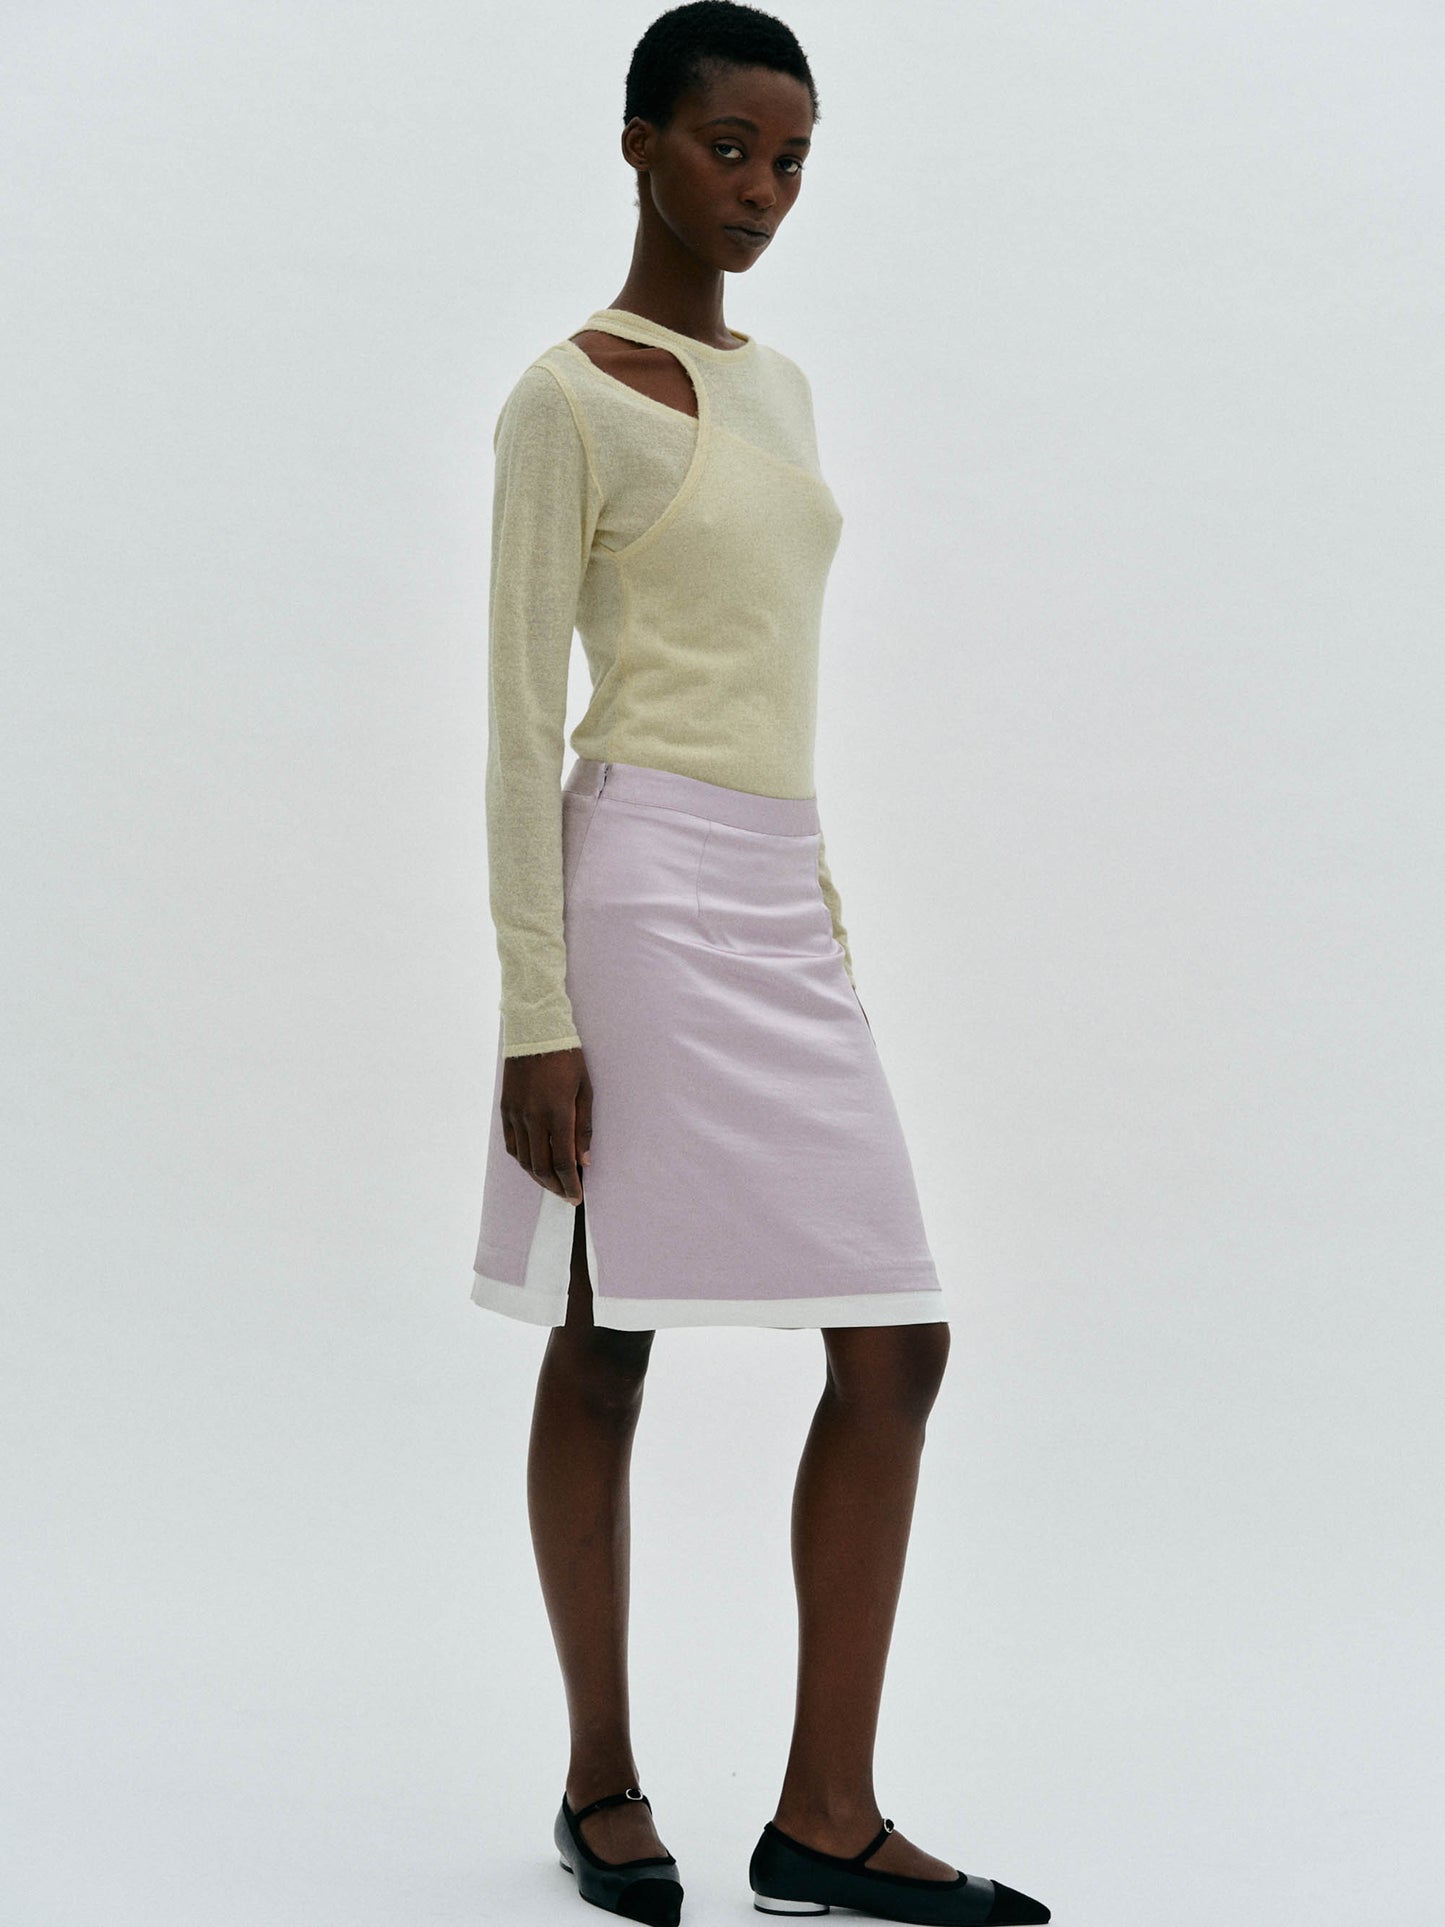 Layered Satin Skirt, Pink